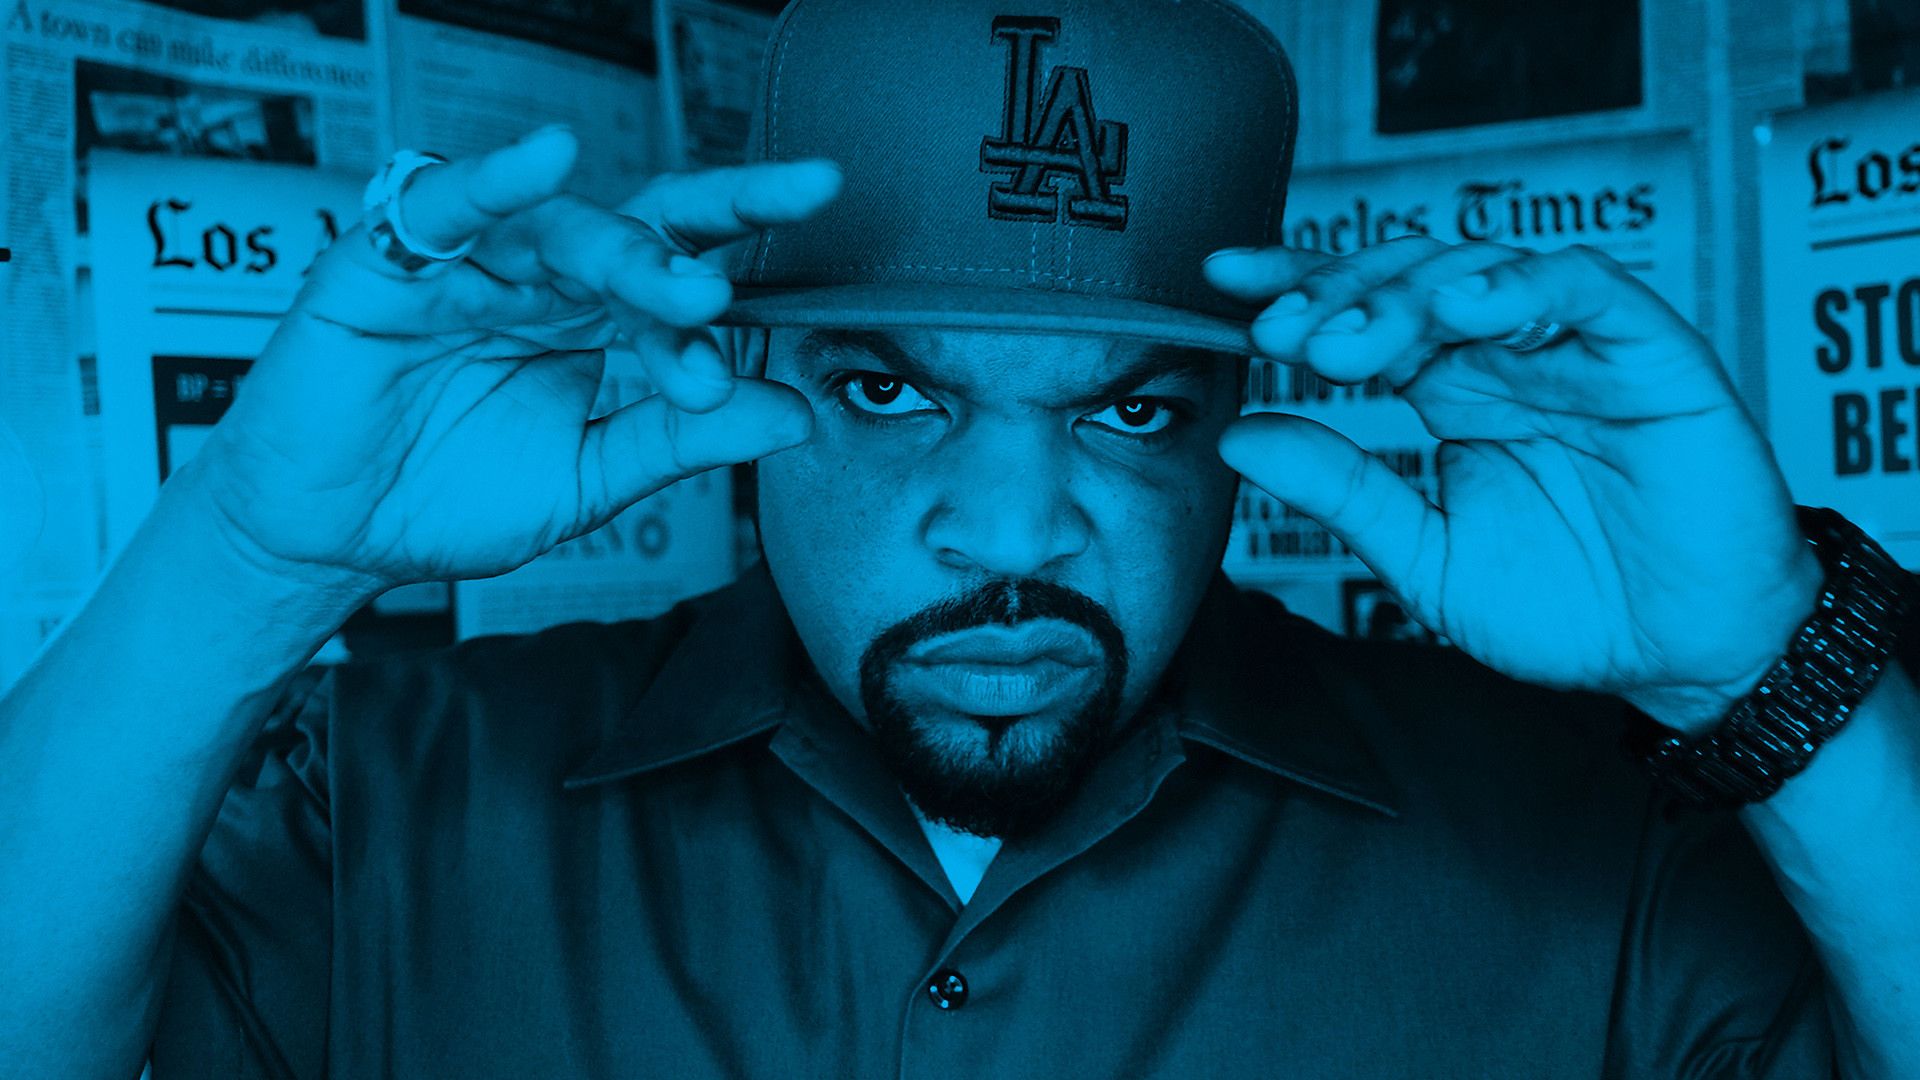 Ice cube us. Ice Cube 1989. Ice Cube Rapper. Ice Cube 2022. Ice Cube n.w.a.